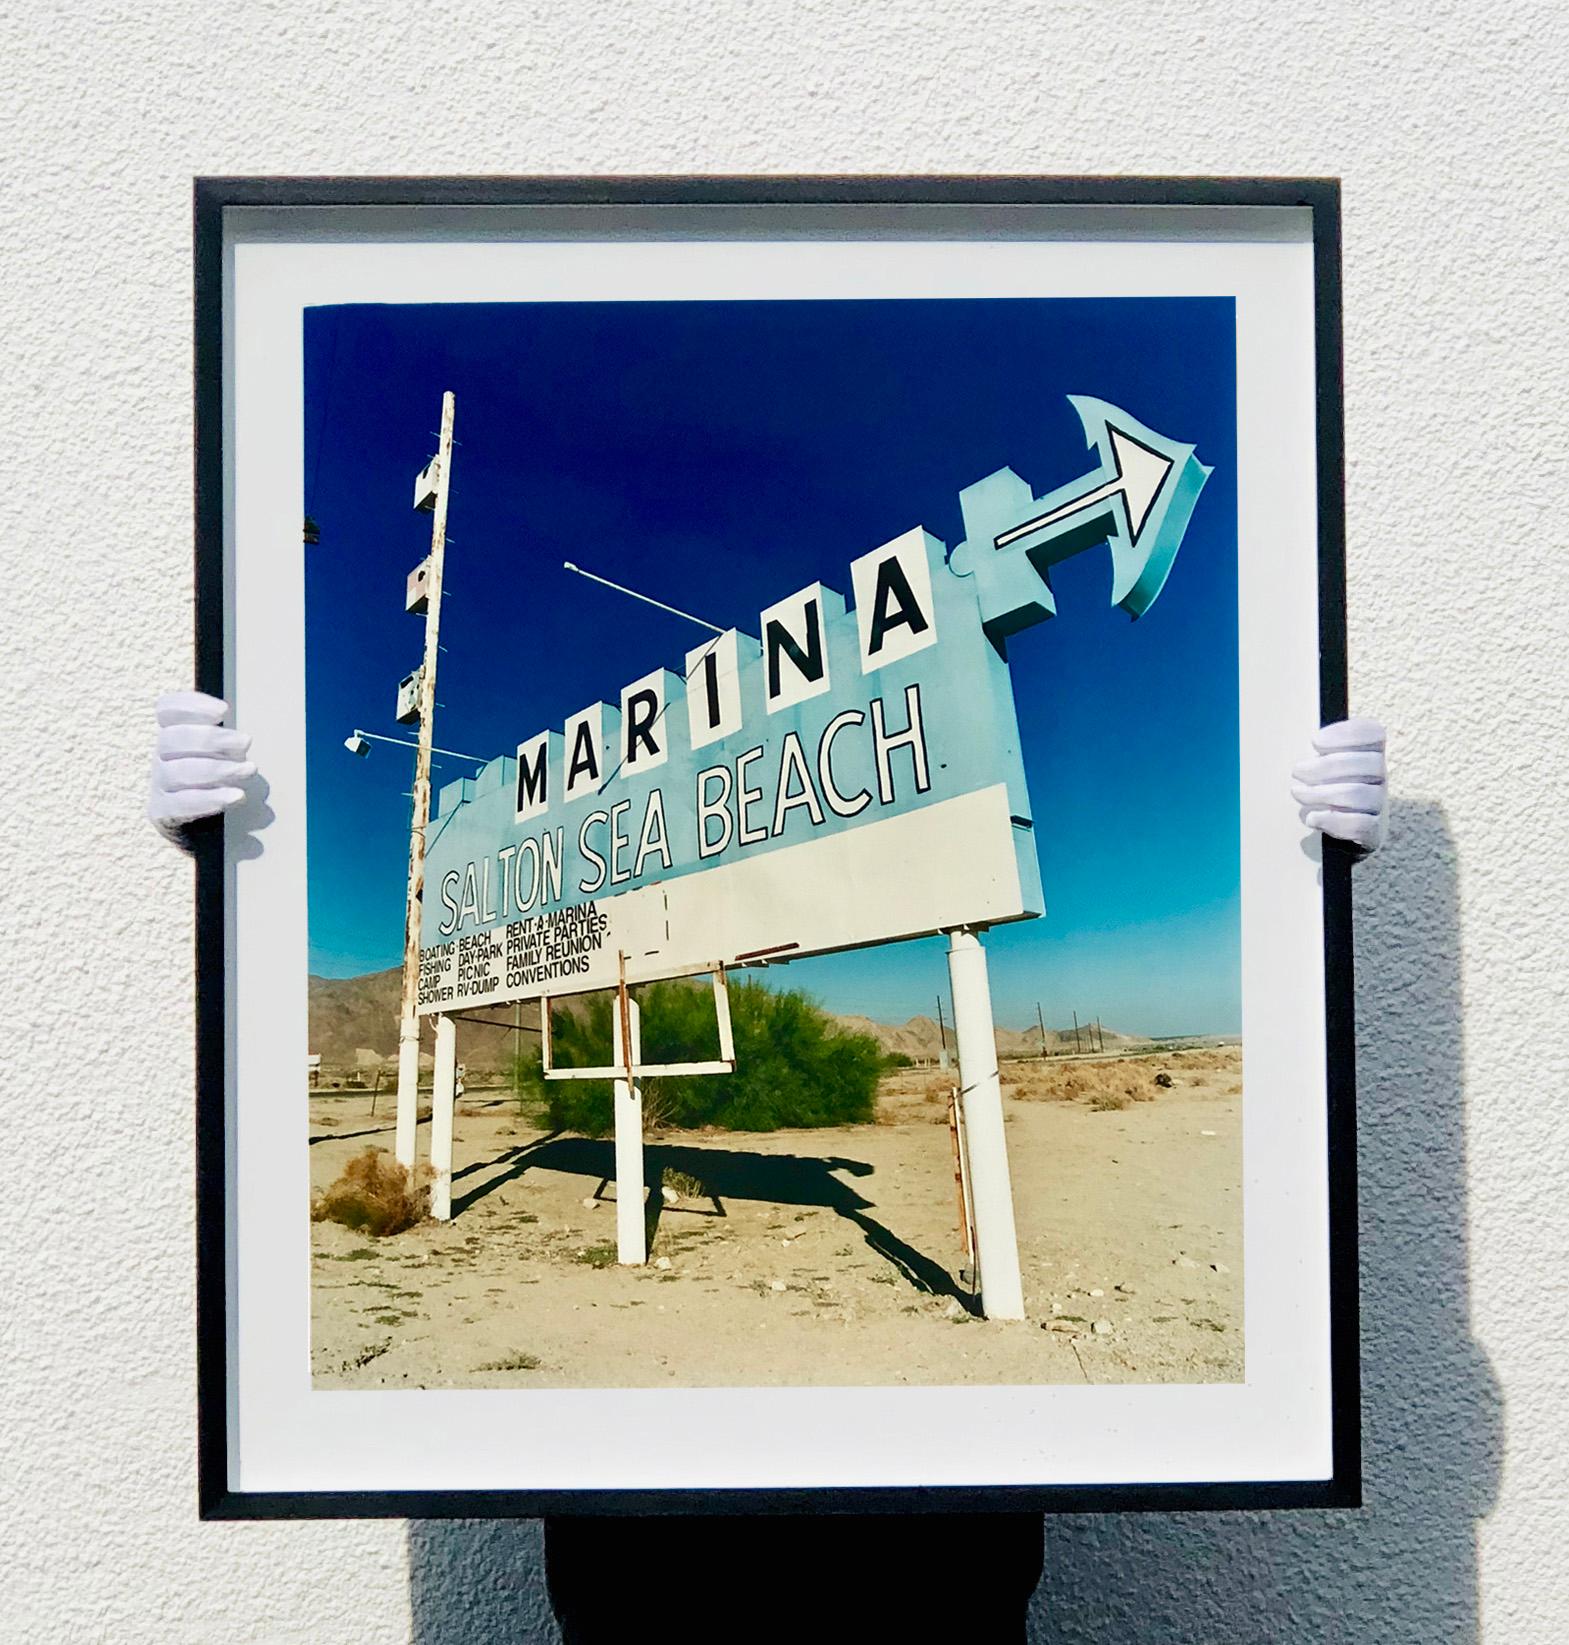 Marina Sign I, Salton Sea Beach, California - Roadside sign color photography - Contemporary Photograph by Richard Heeps